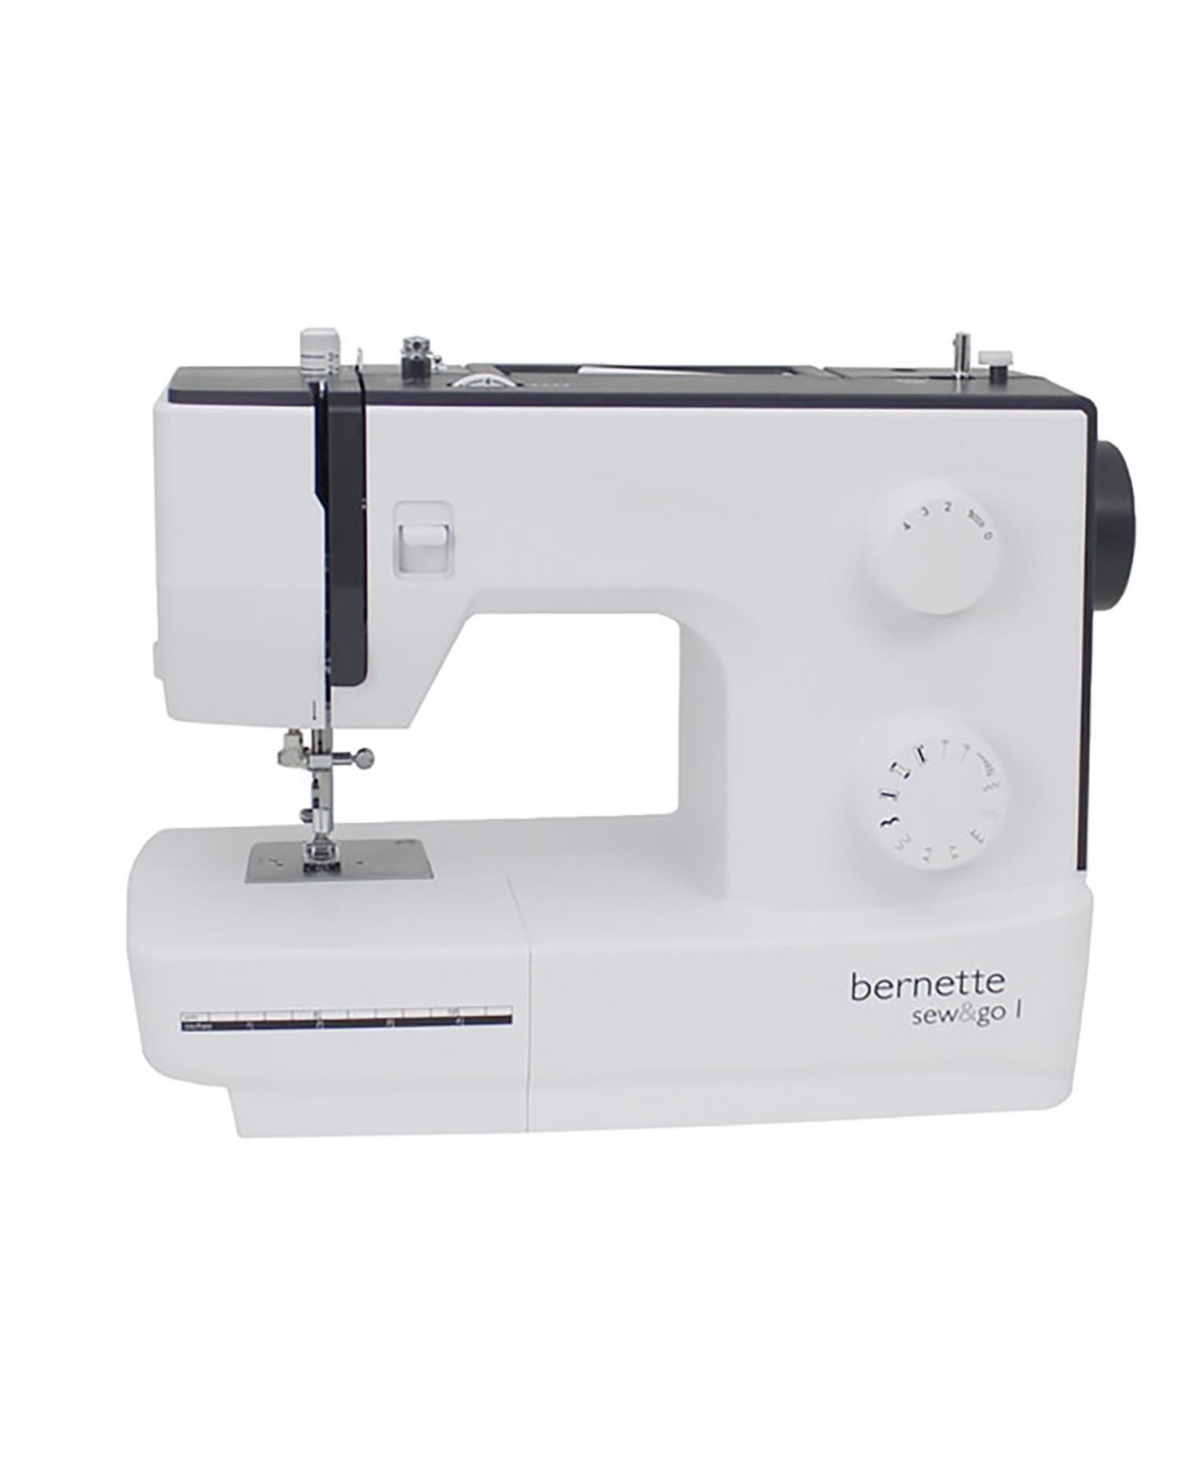 Sew and Go 1 Swiss Design Mechanical Sewing Machine - White